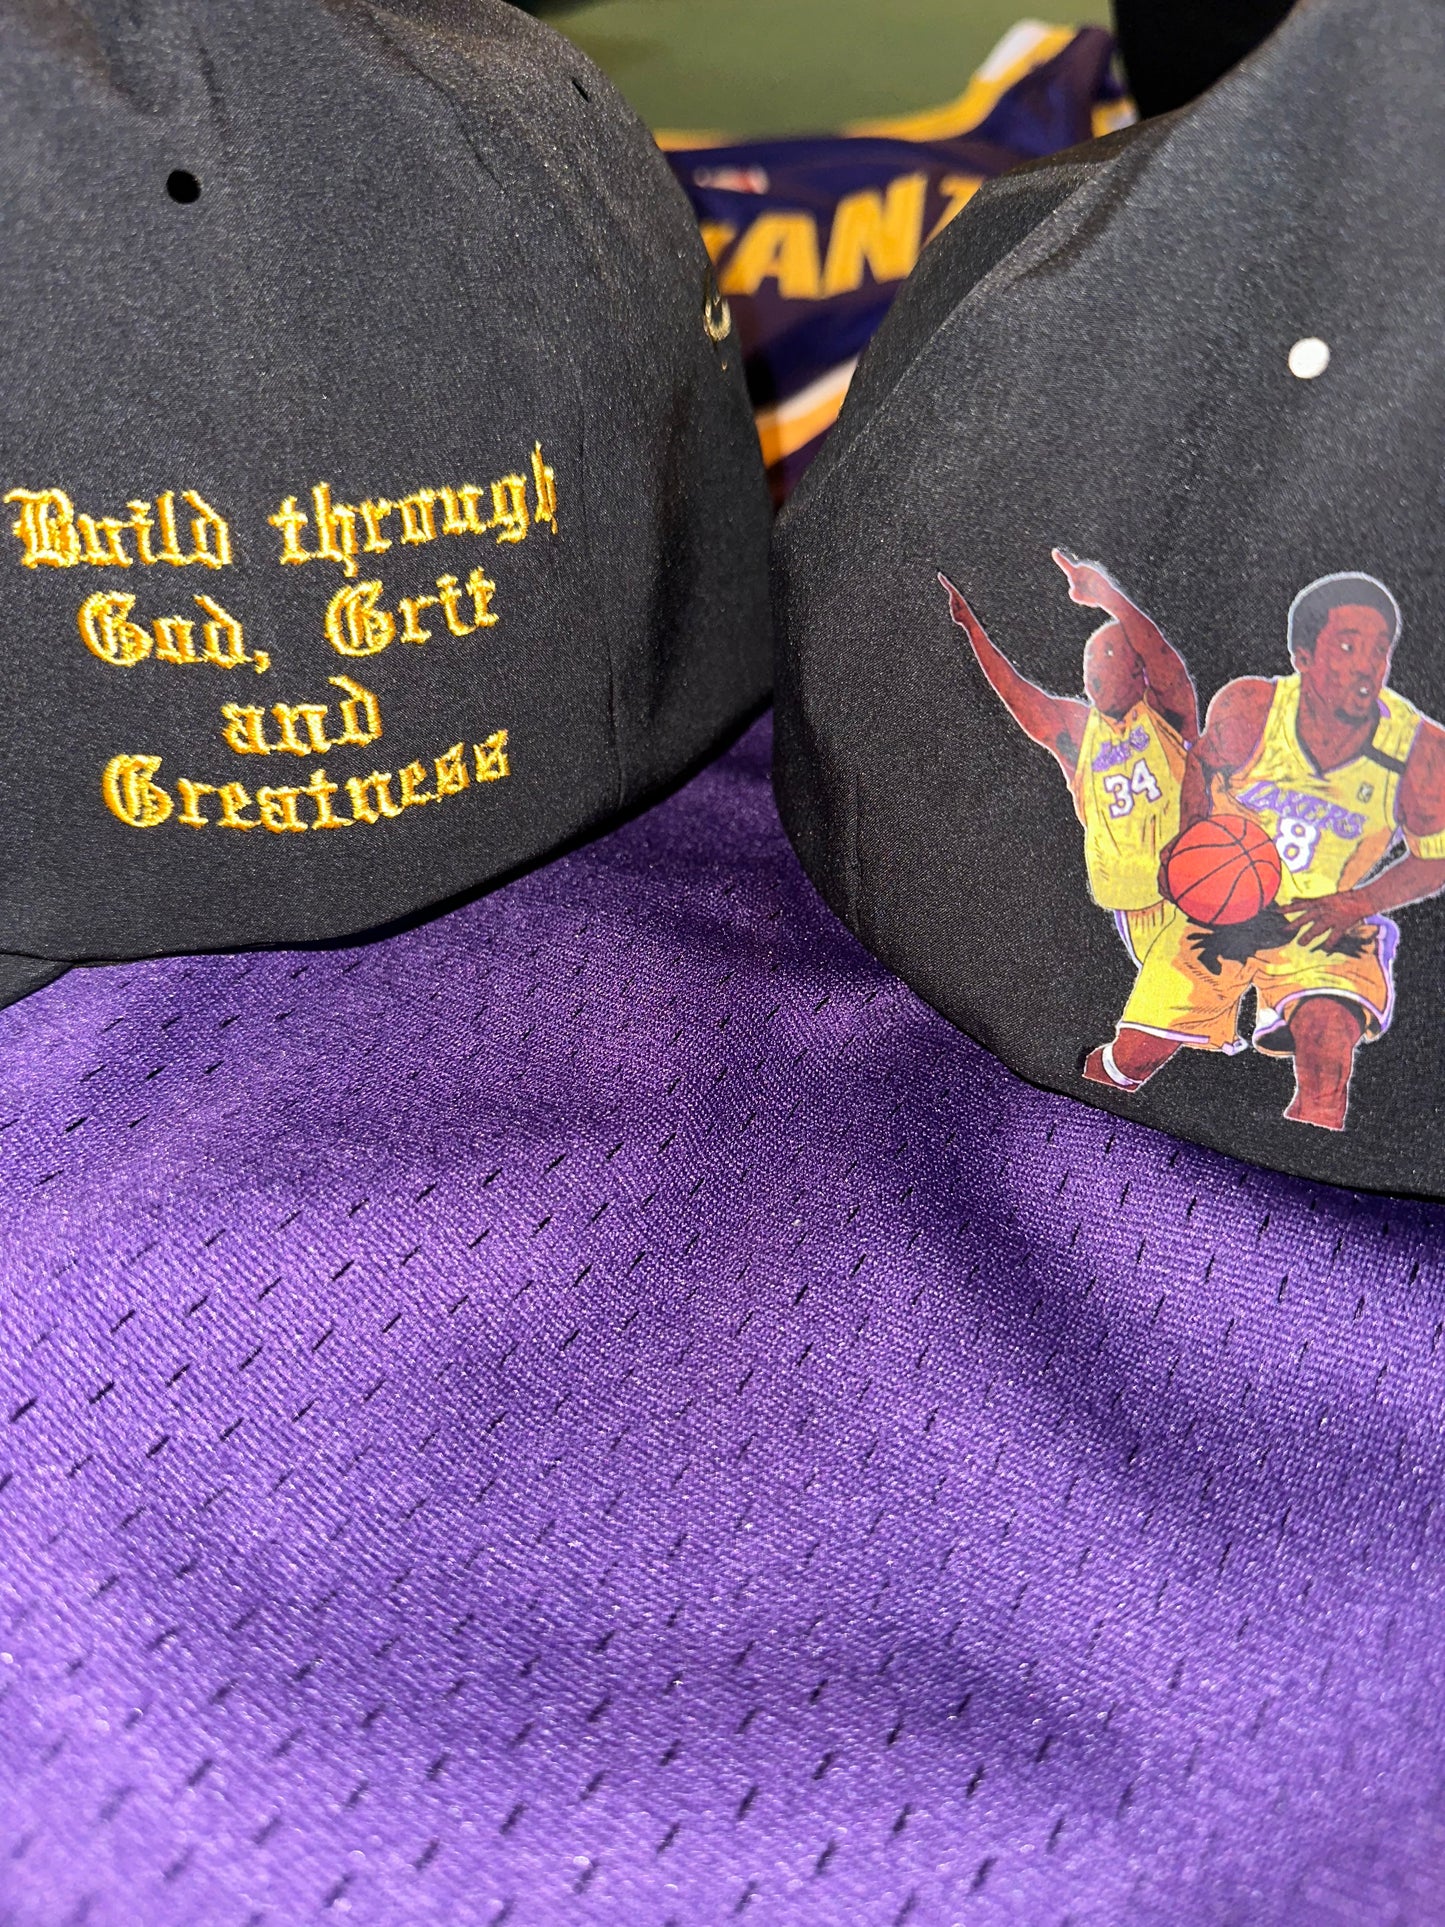 Lakers Dynamic Duo.